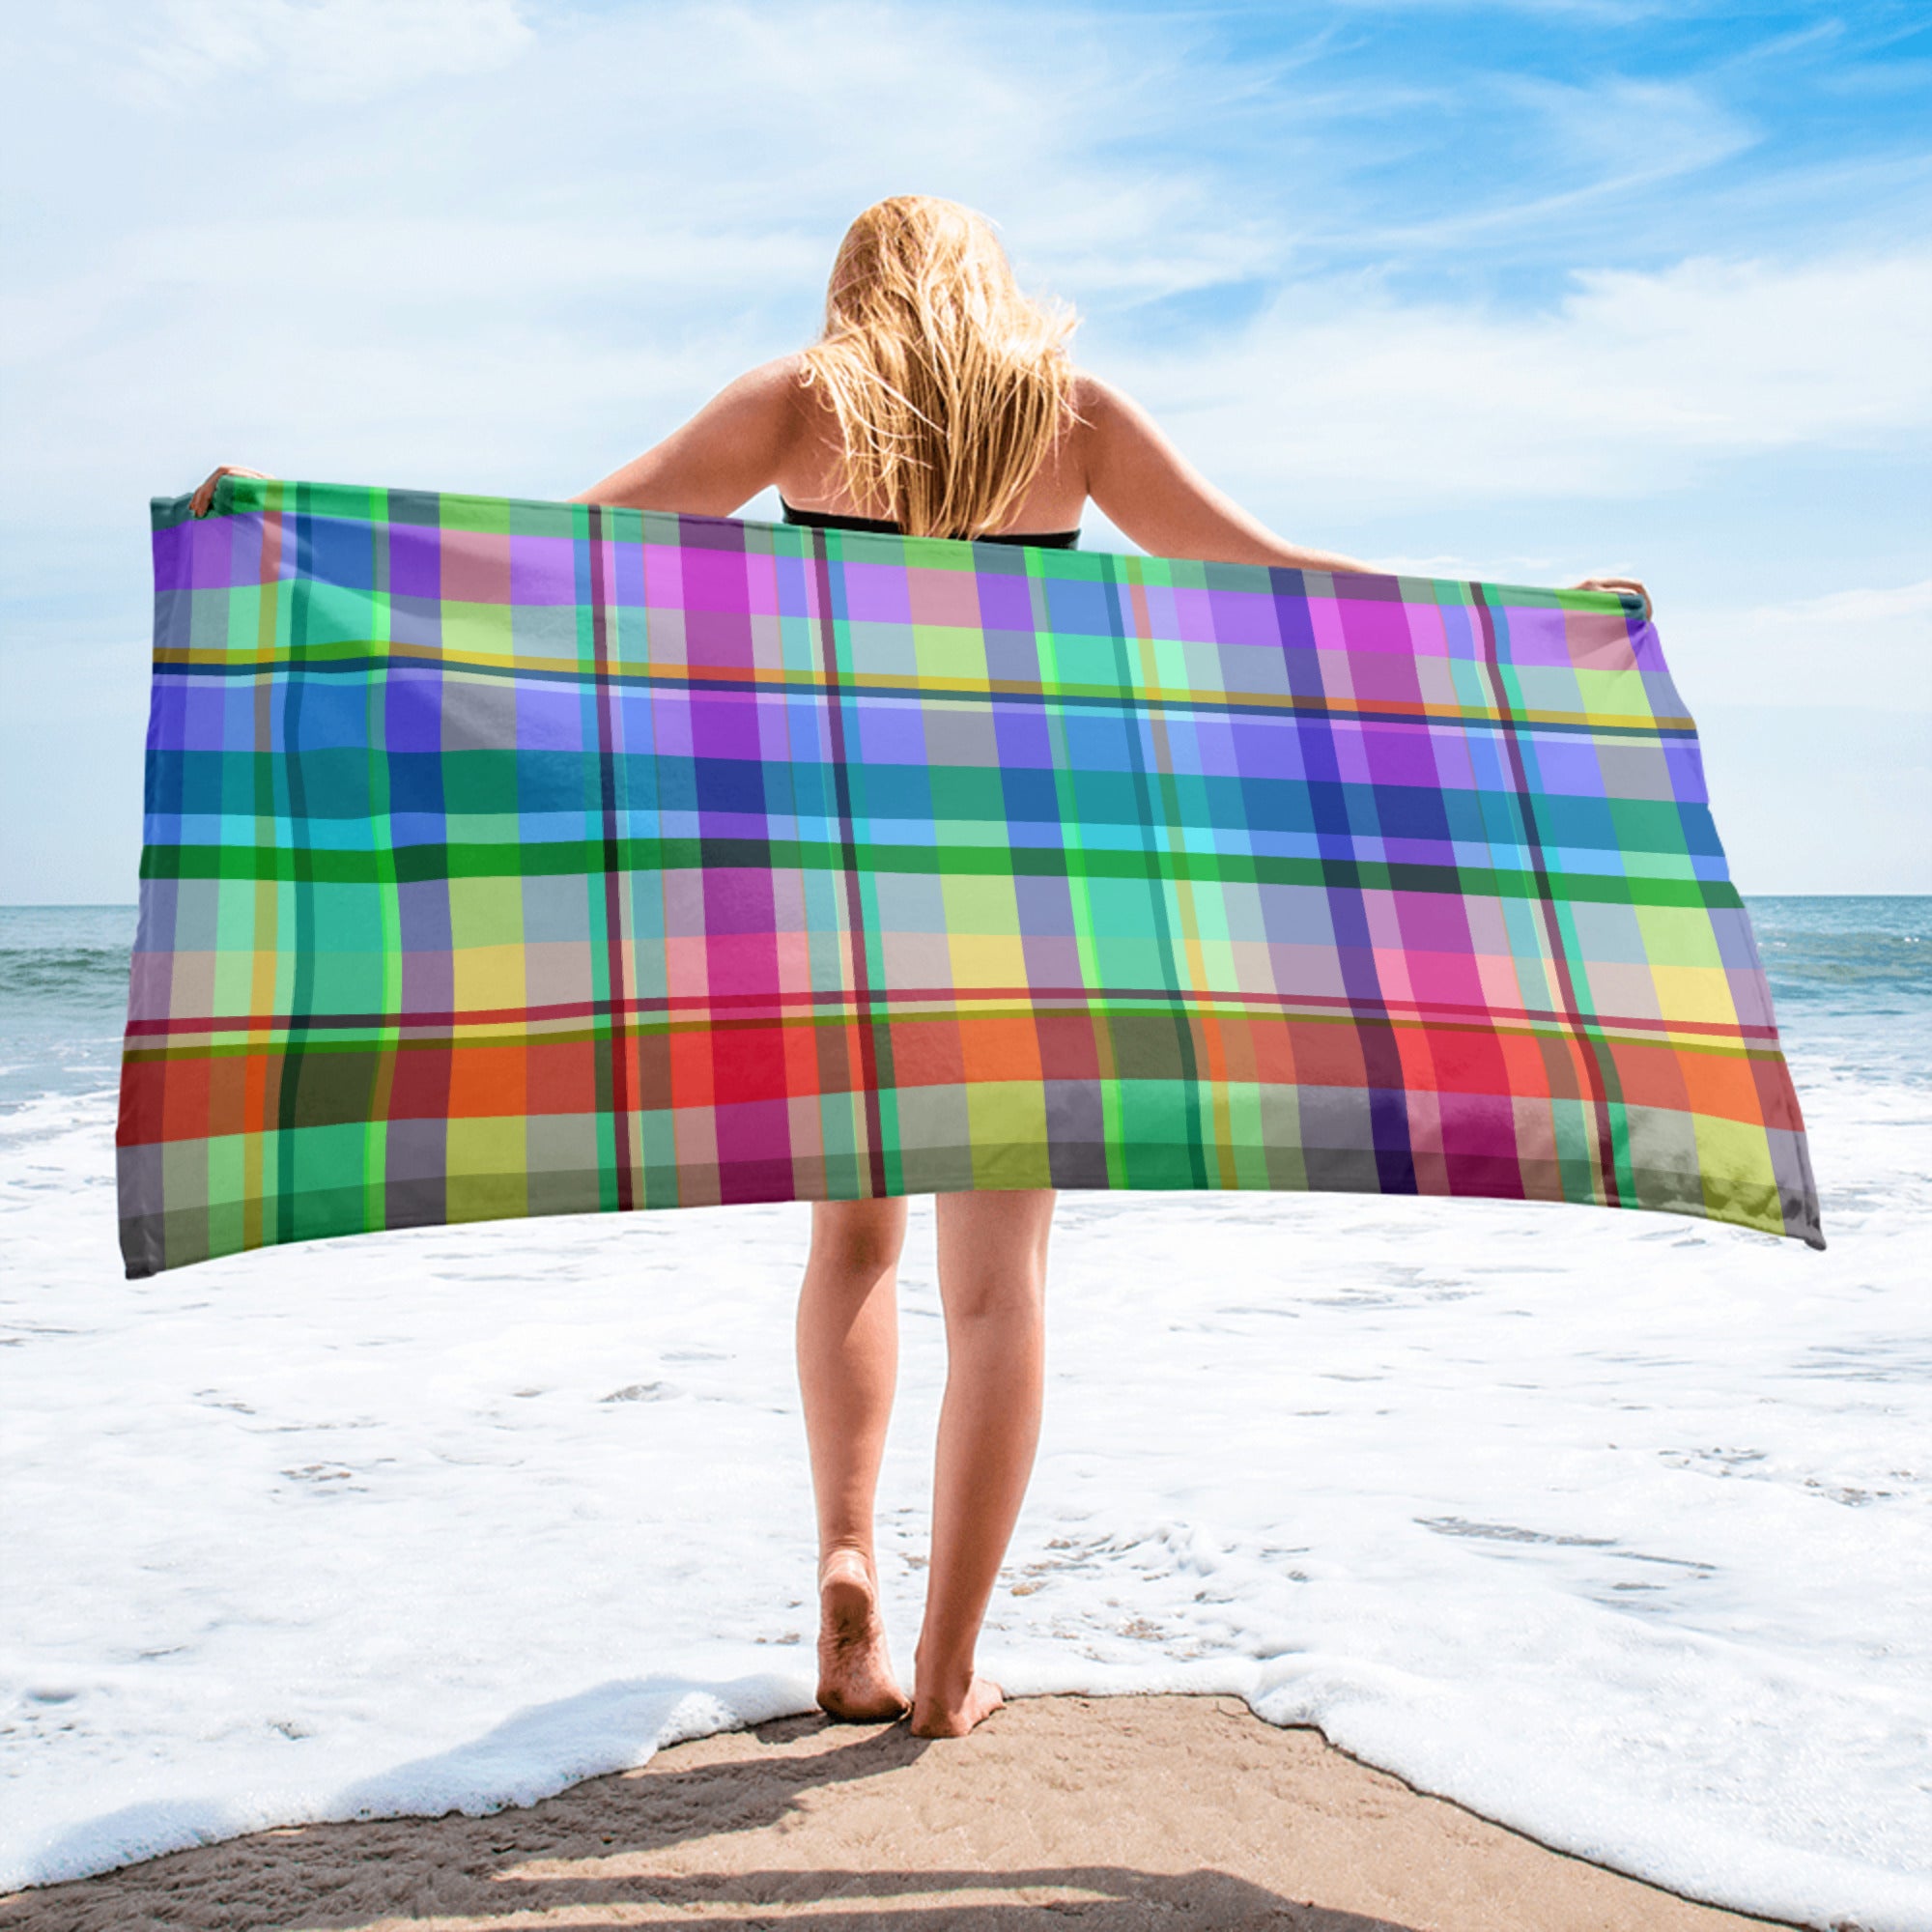 Vintage-inspired Rainbow Blast towel, bringing retro charm and brightness to your bathroom essentials.